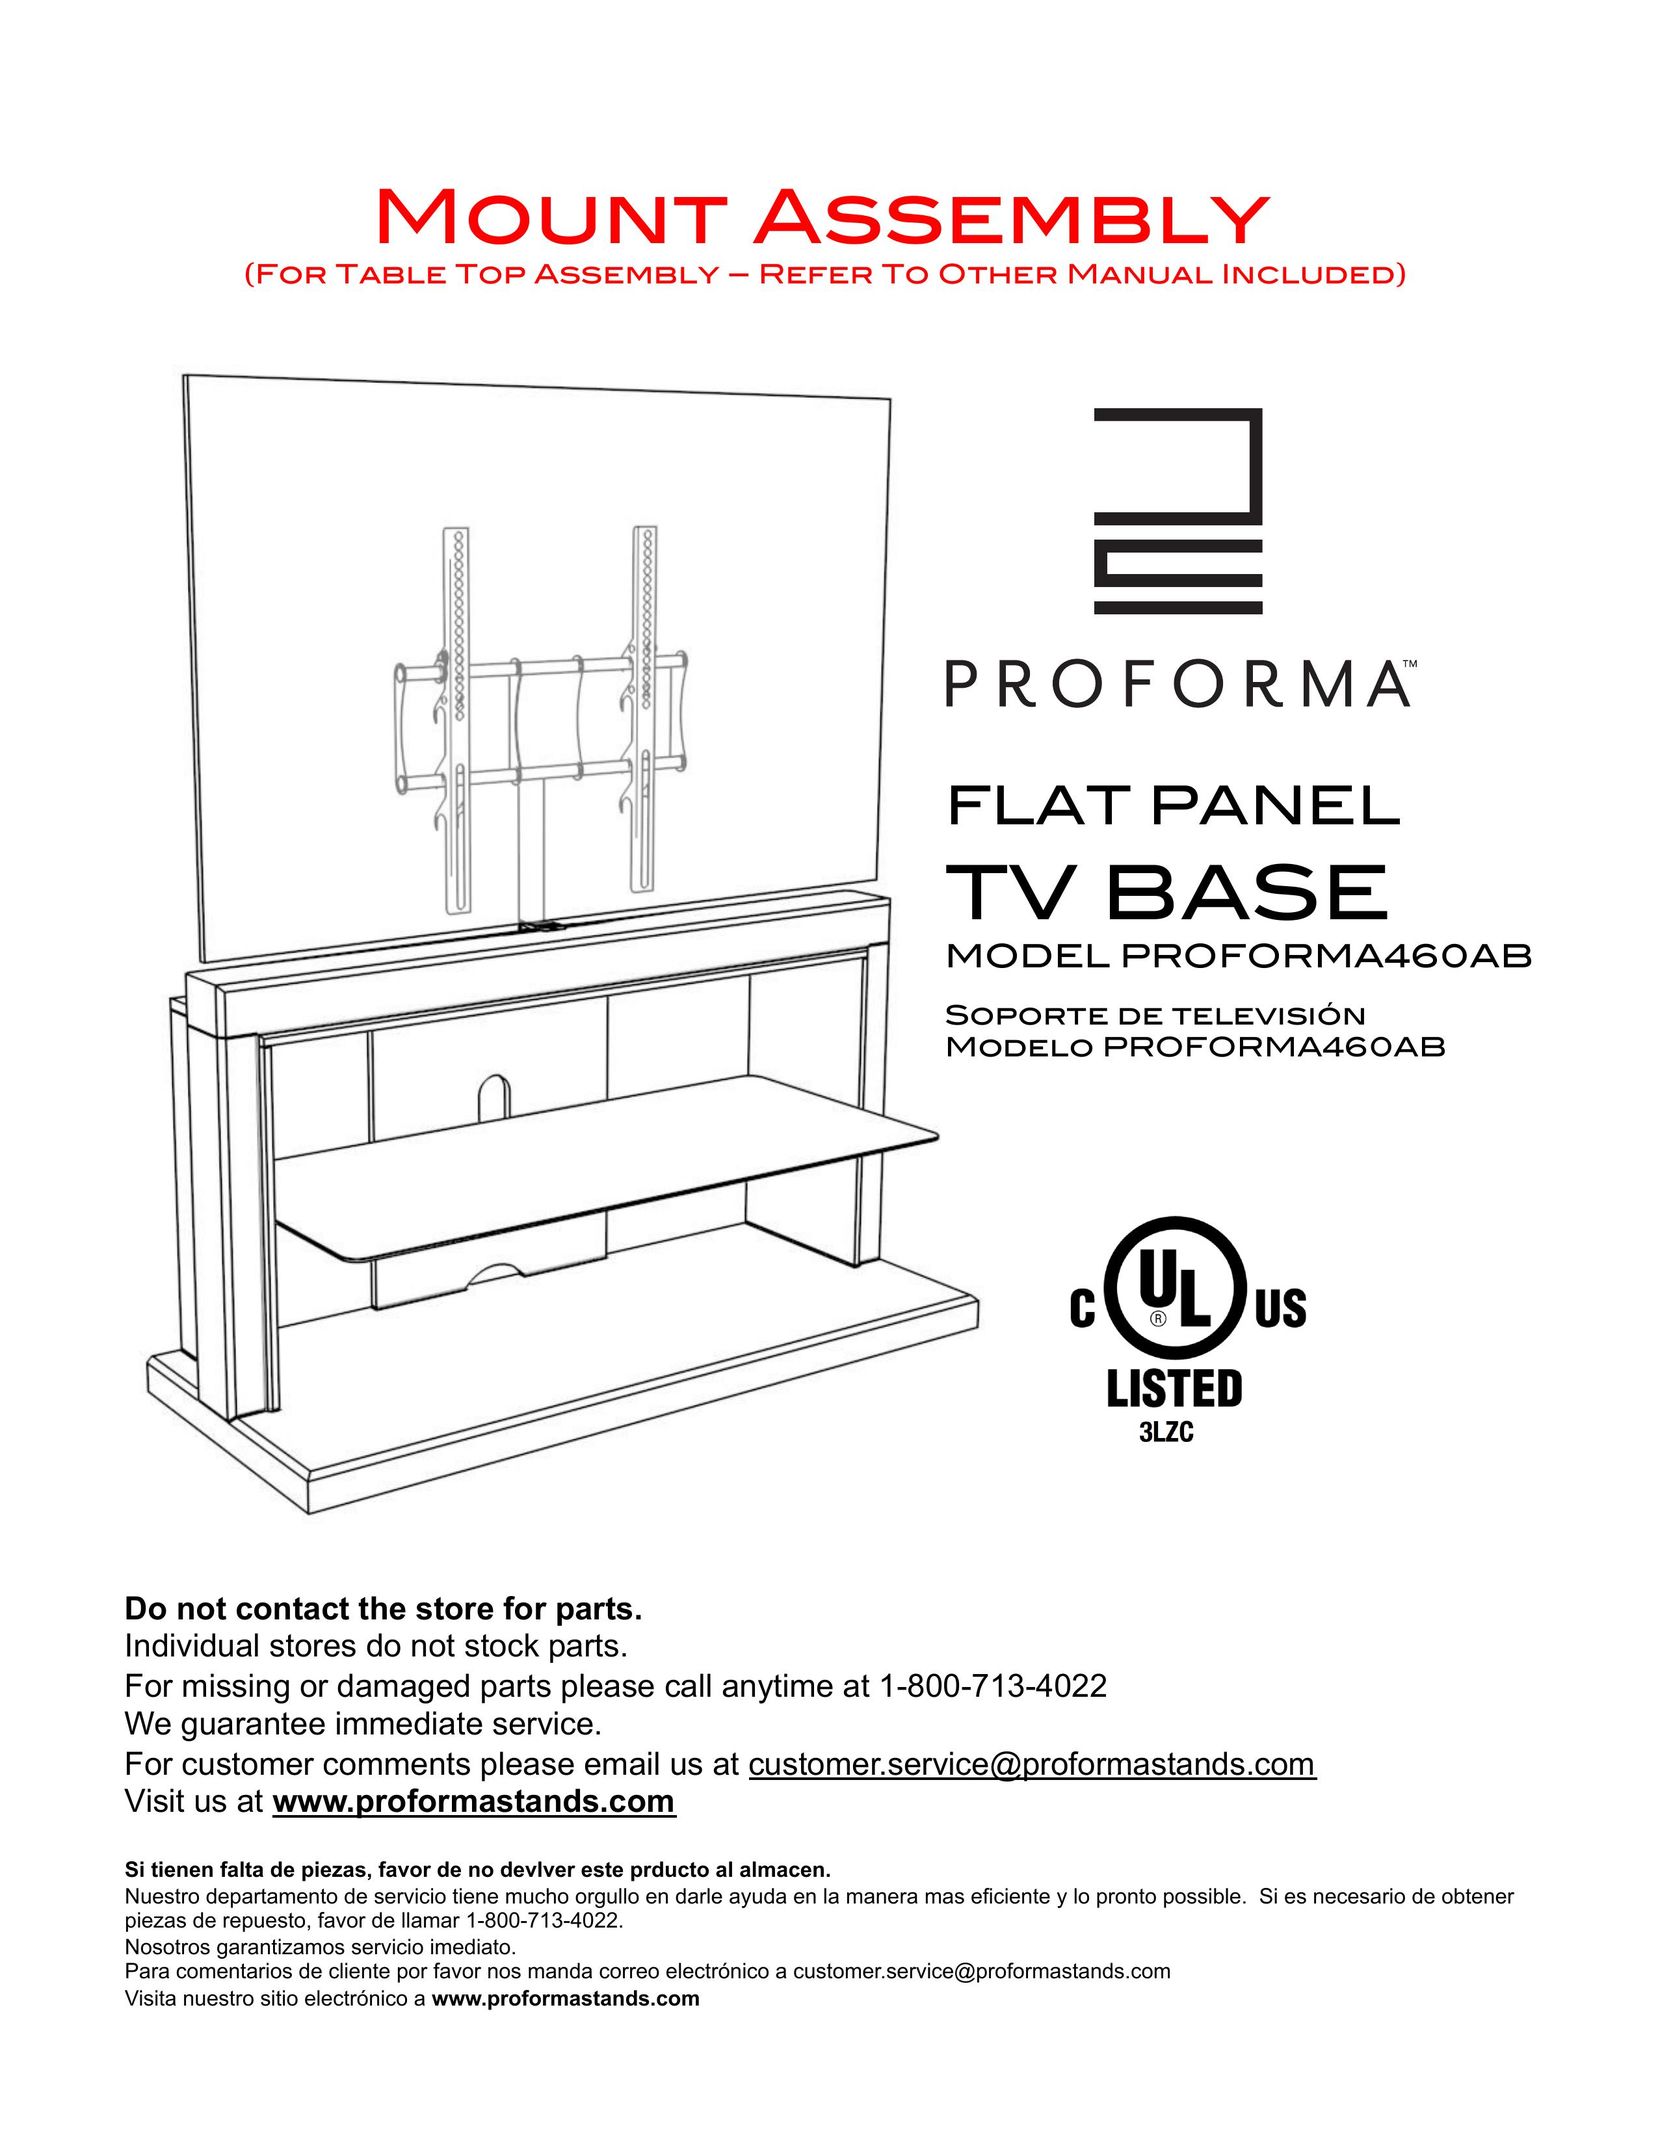 Sony PROFORMA60 TV Video Accessories User Manual